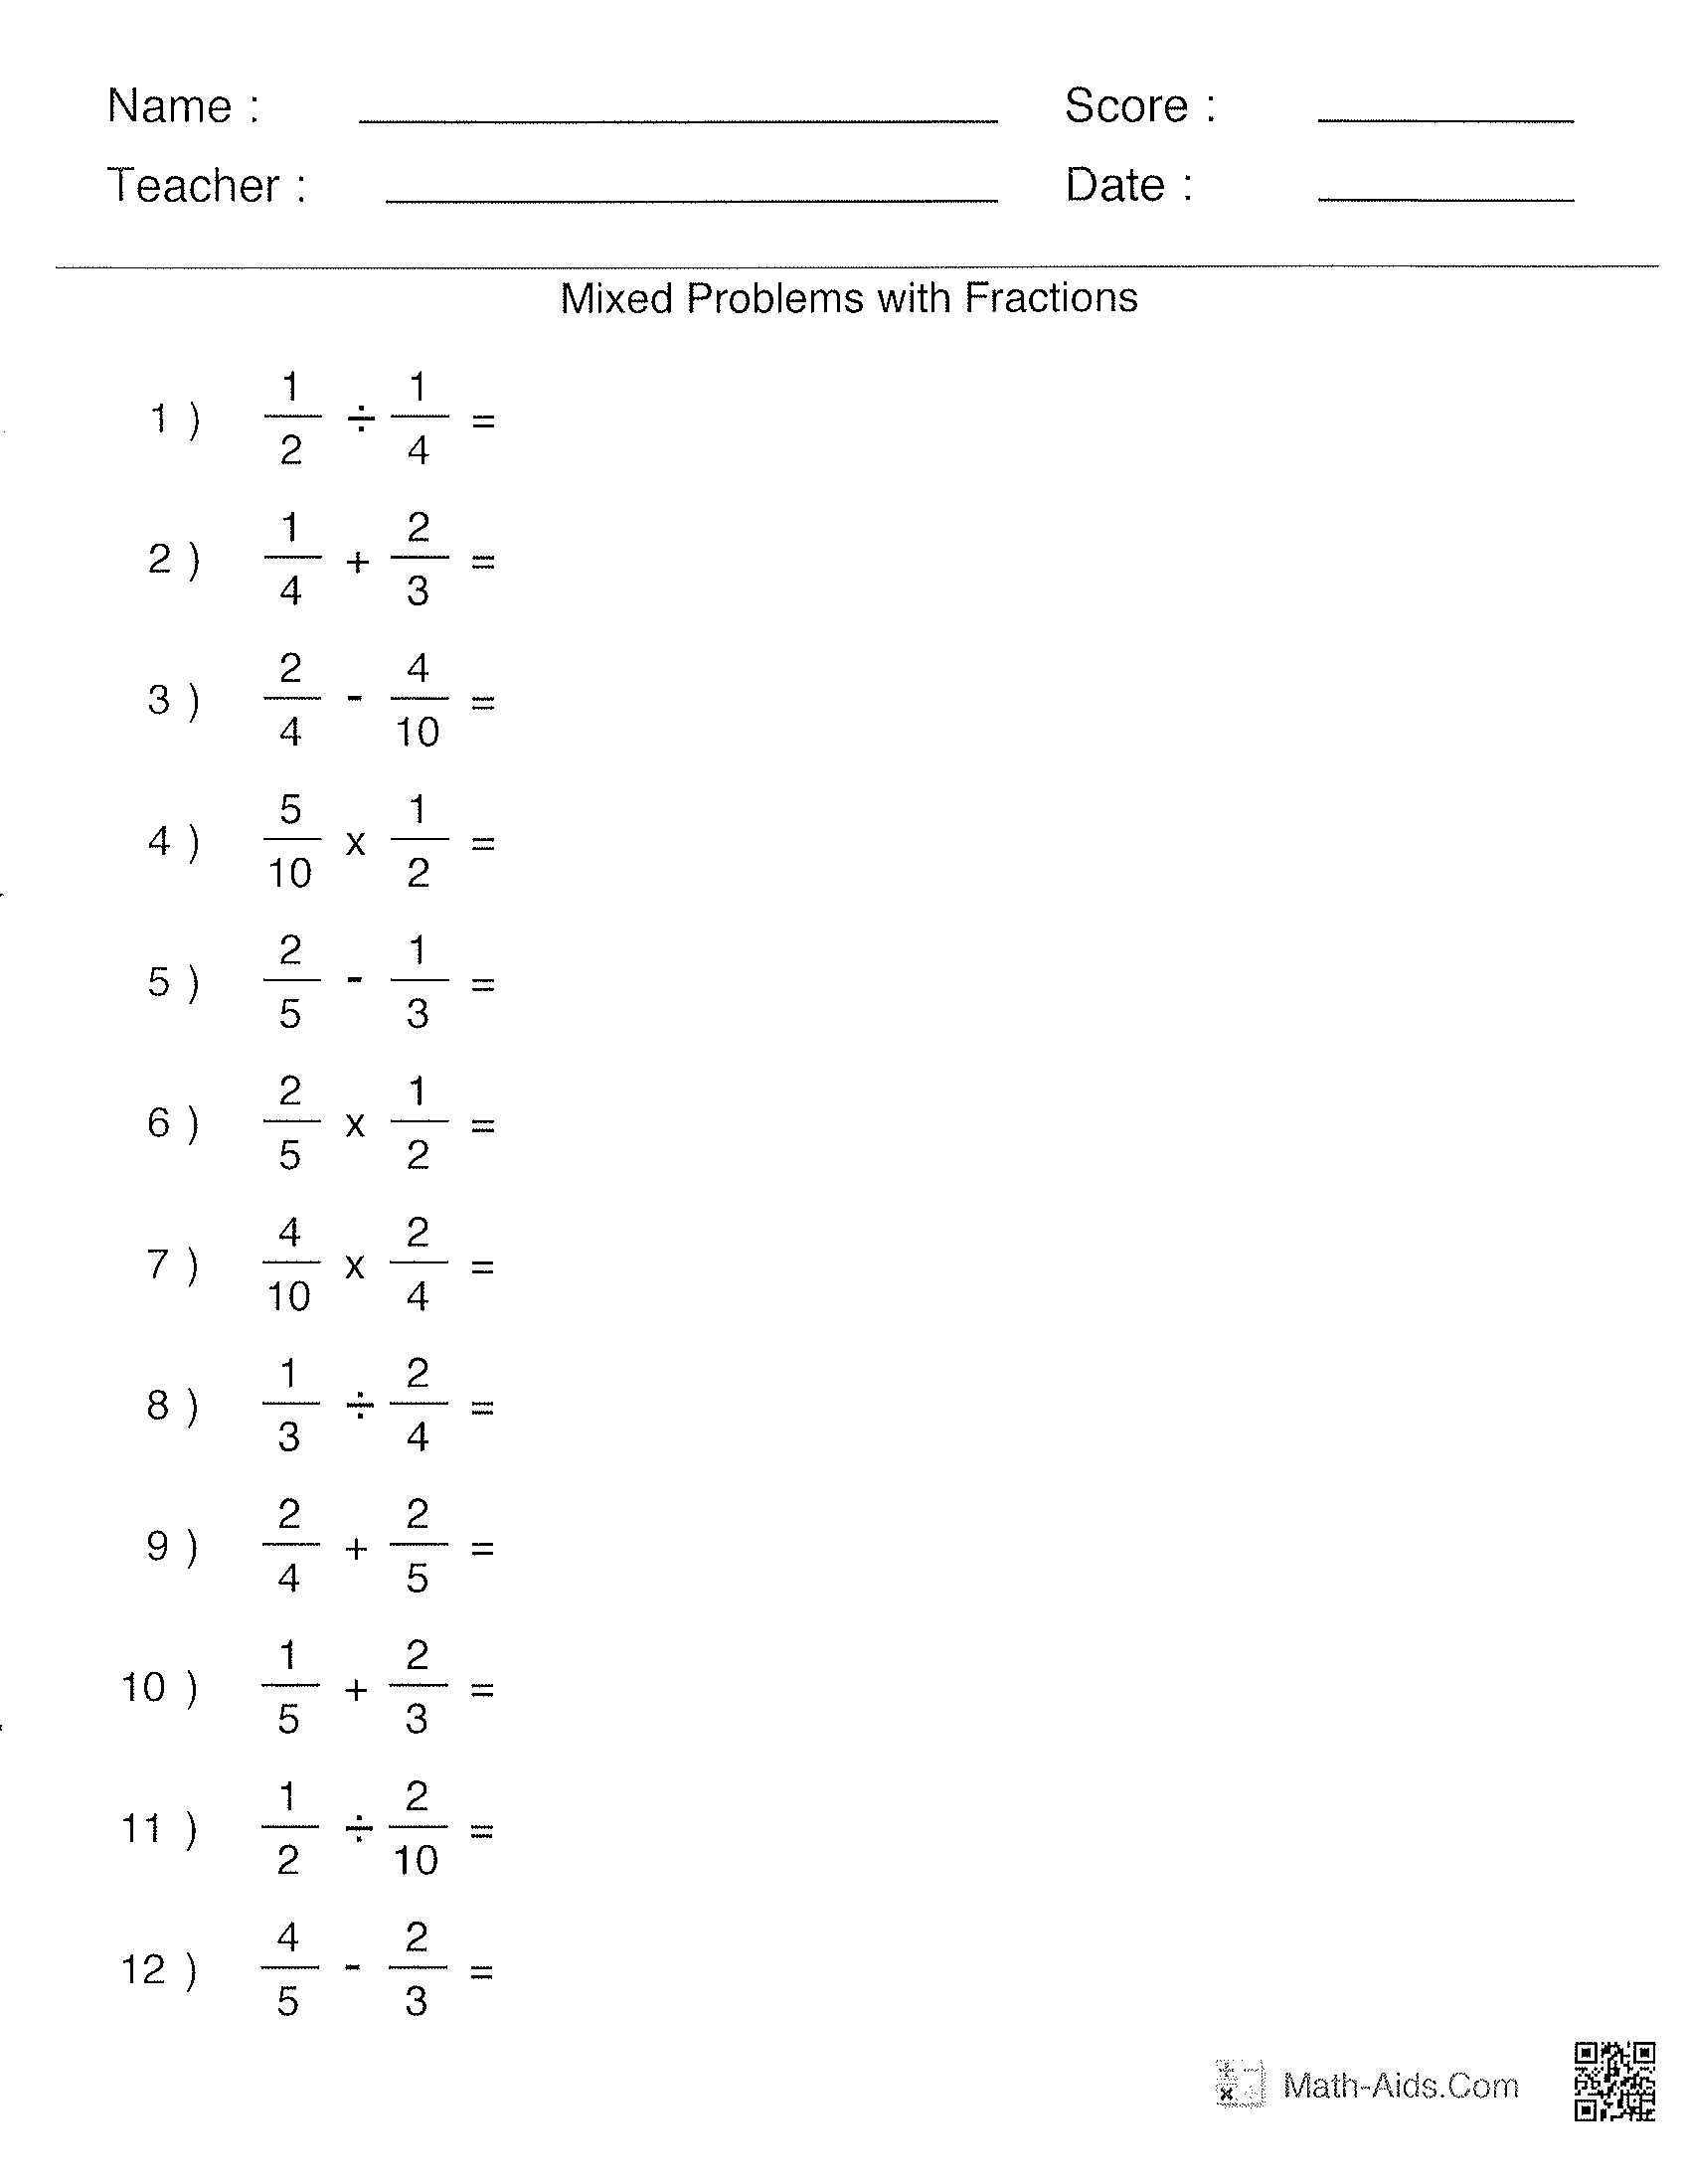 fraction-operations-worksheet